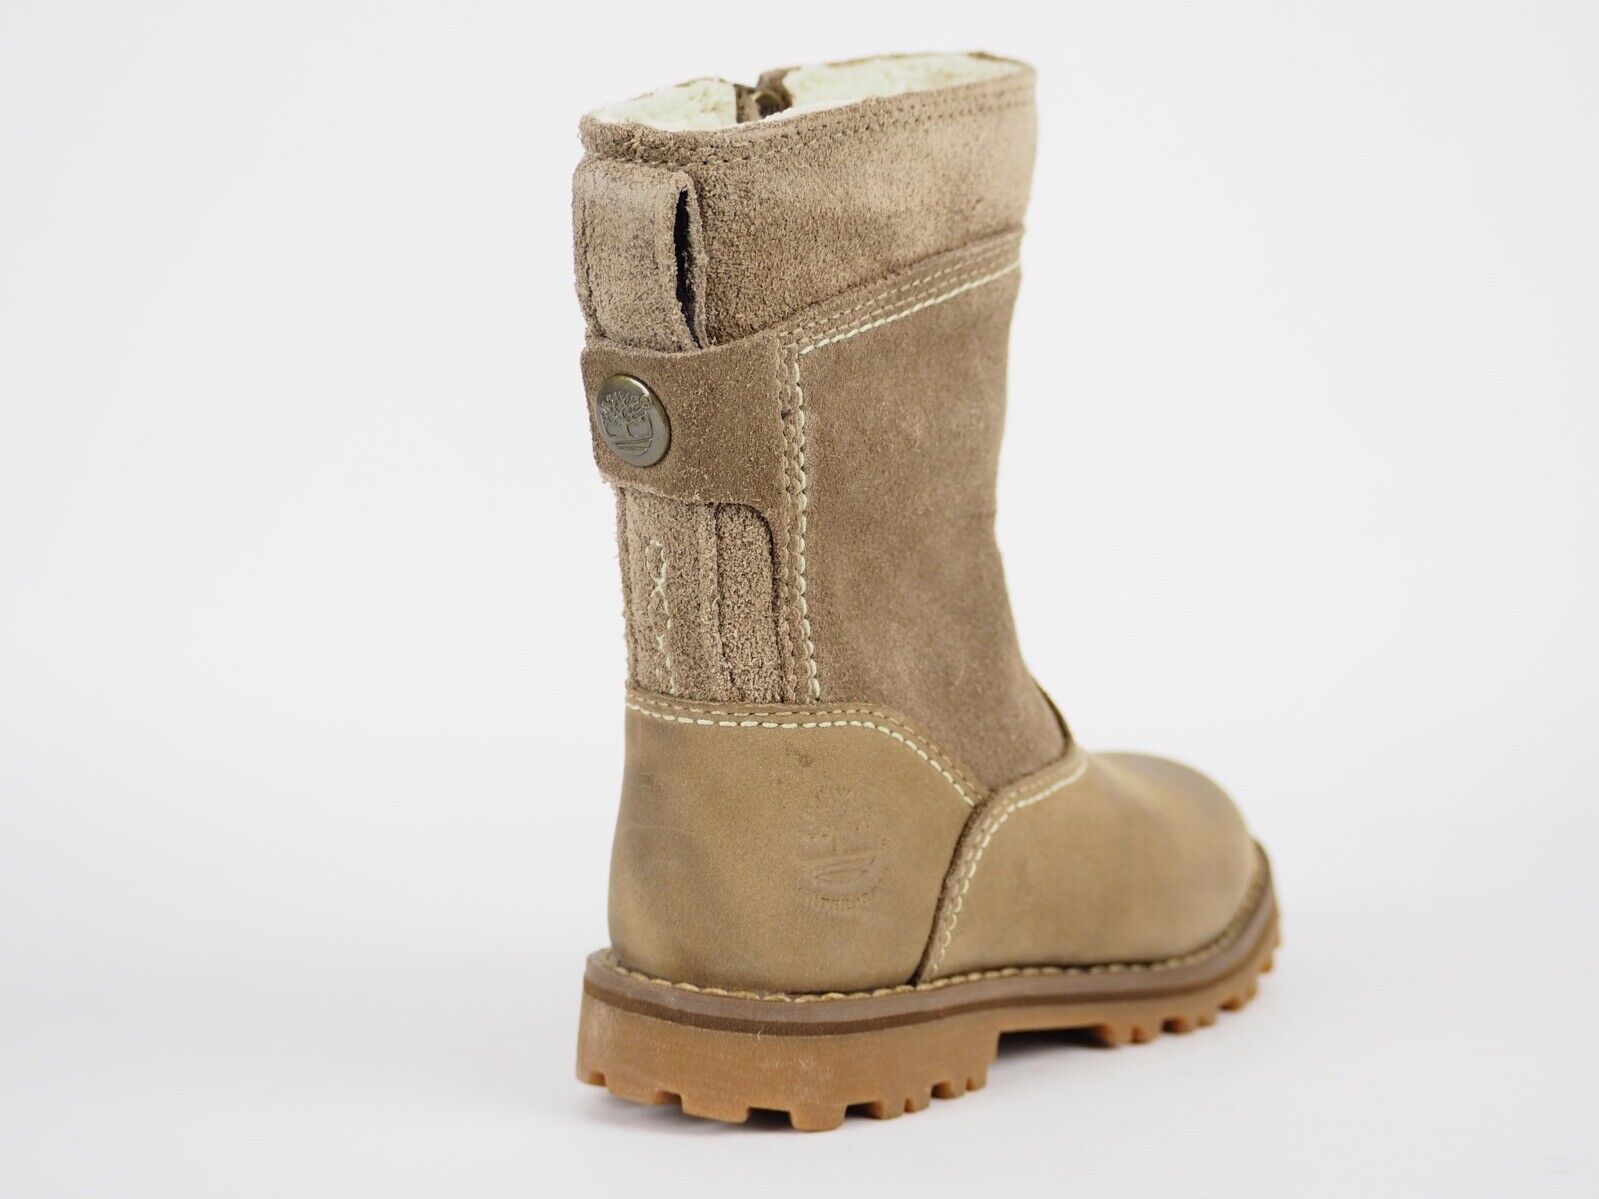 Girls Timberland Asphalt Trail 1183R Beige Leather Tall Side Zip Winter Boots